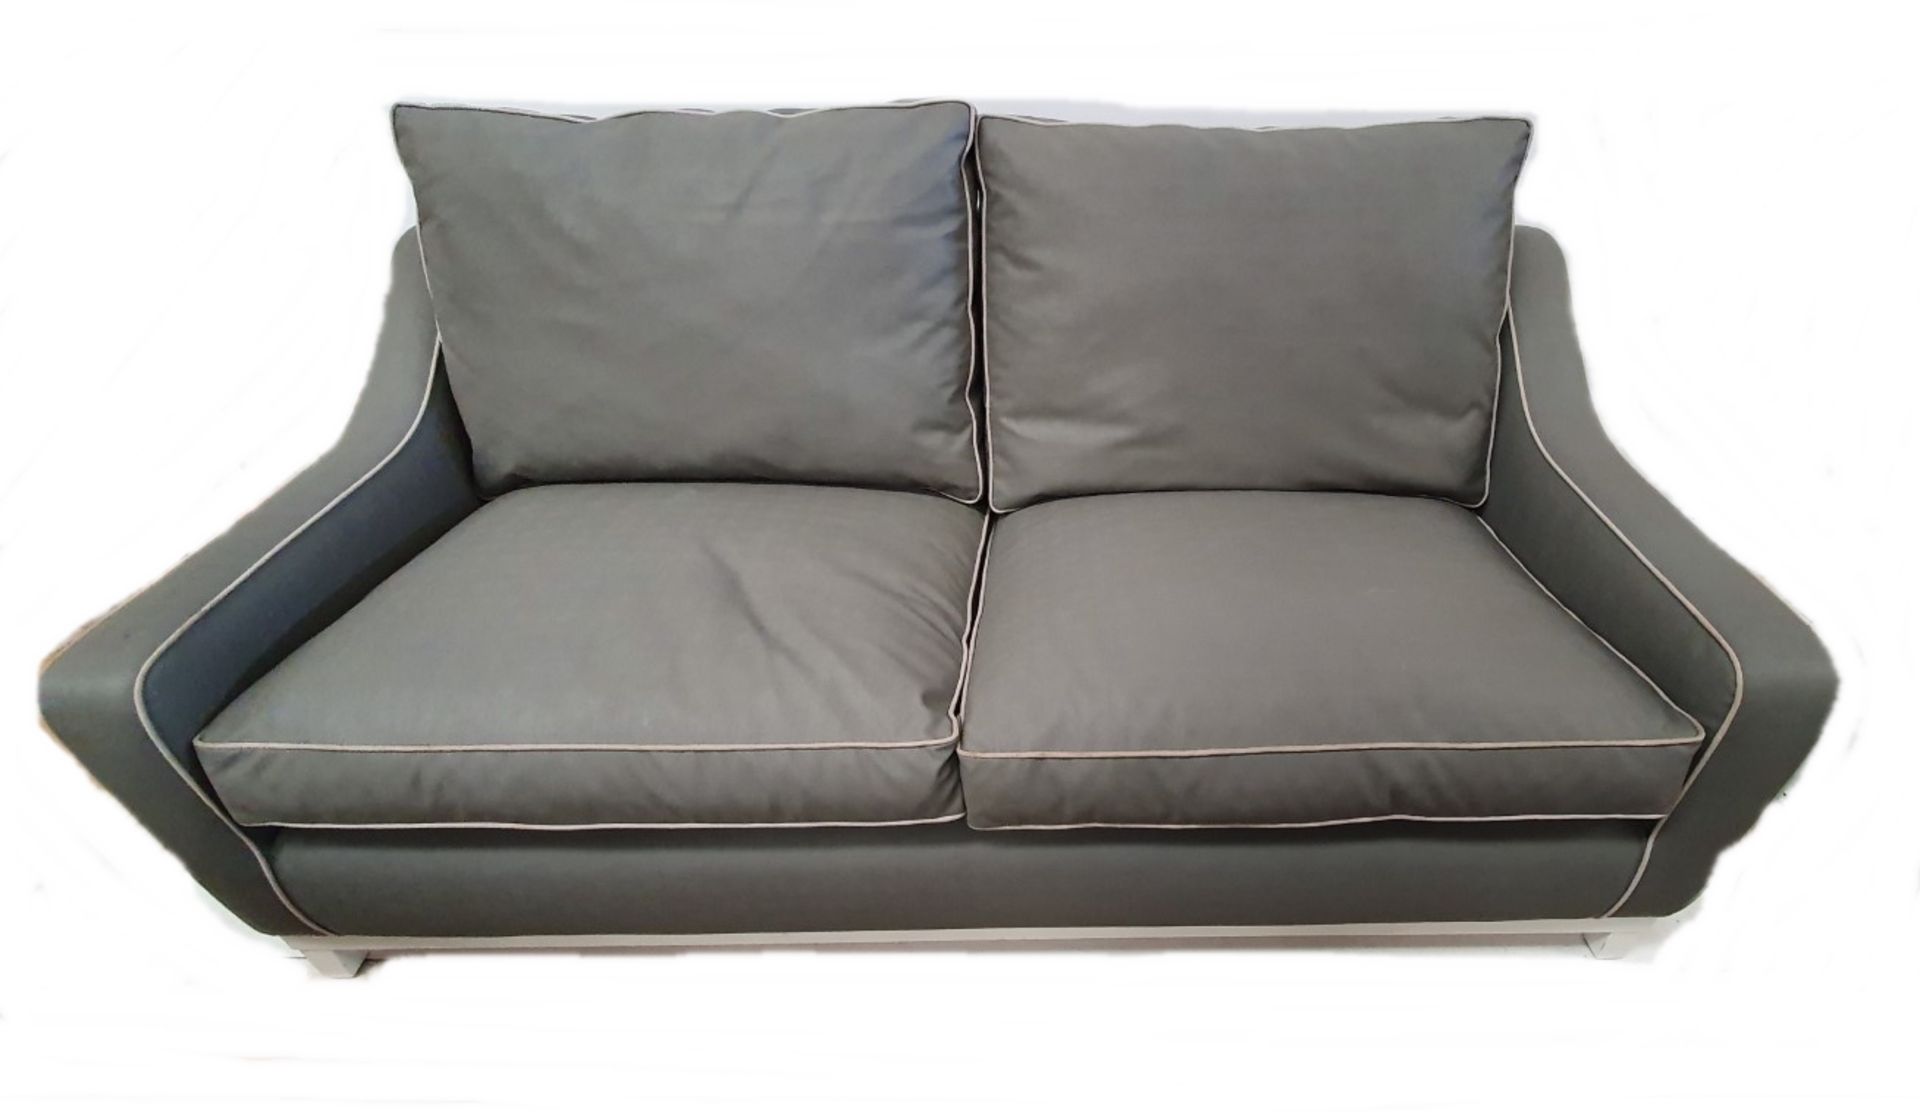 1 x Contemporary 2-Seater Grey Leather Sofa - CL380 - Ref: H581 - Location: Altrincham WA14 - NO VAT